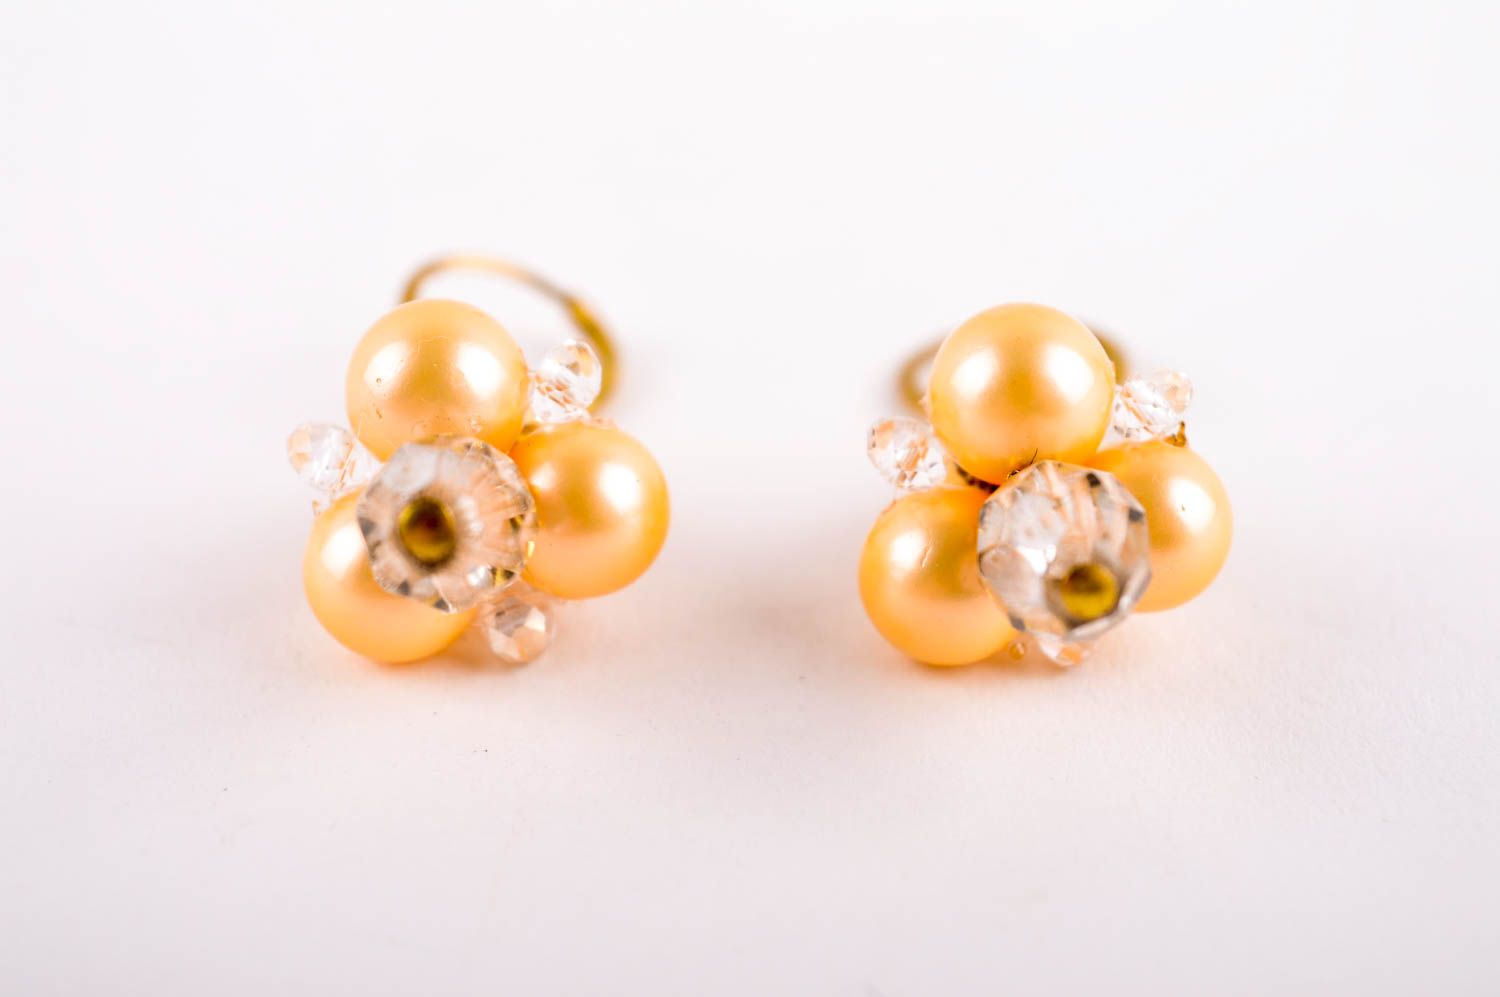 Handmade earrings stones earrings unusual earrings with charms designer jewelry photo 4